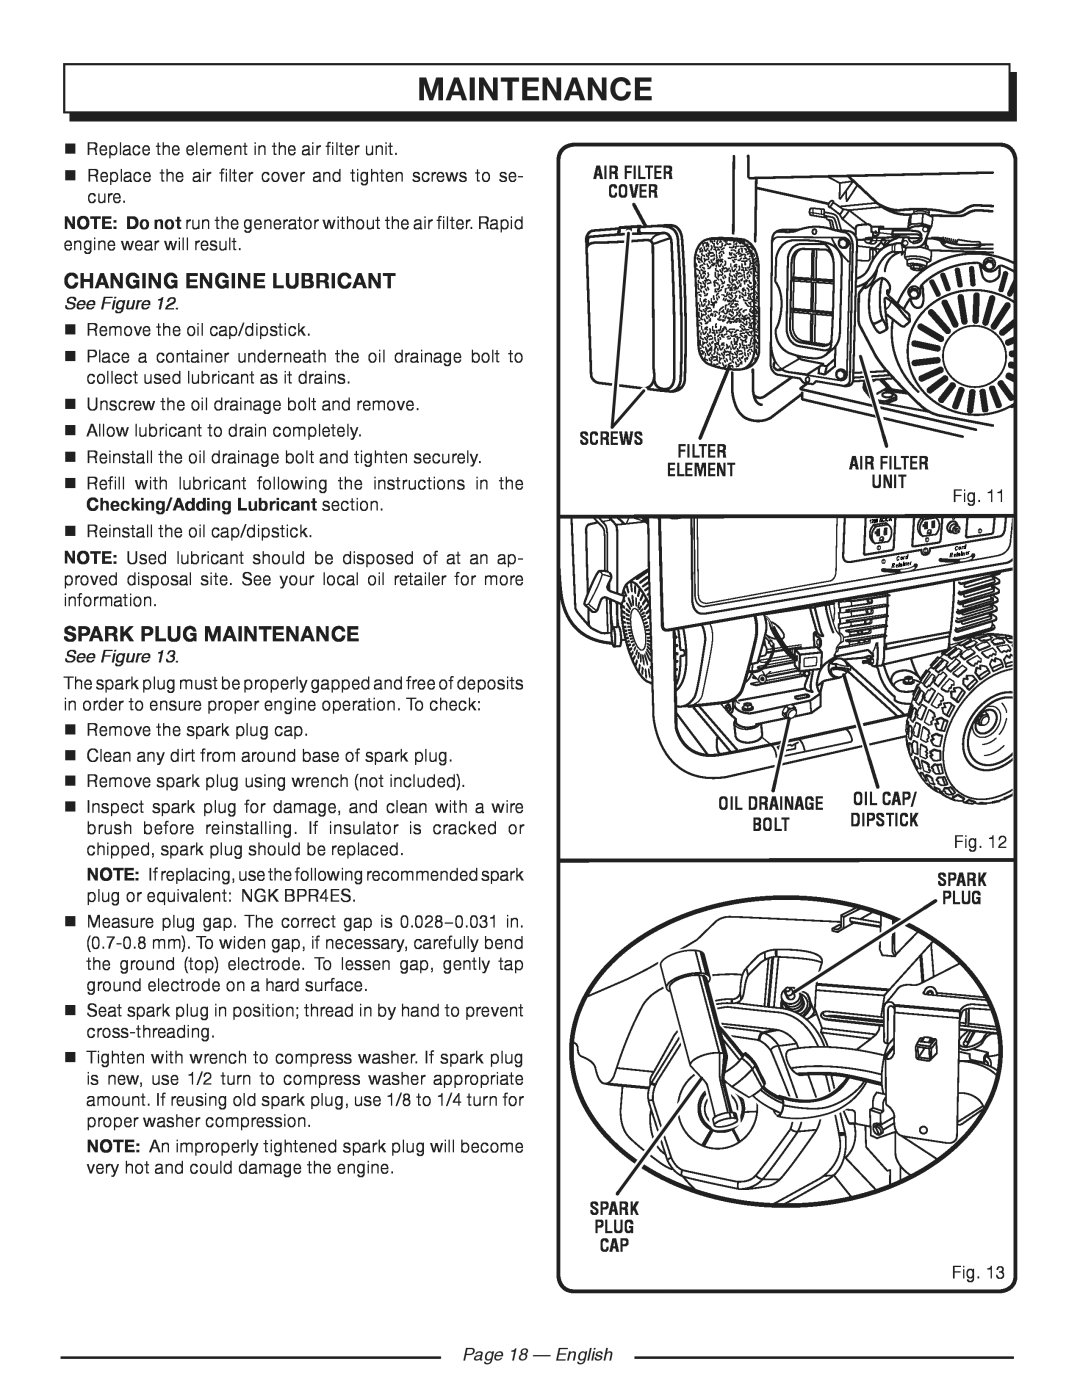 Homelite HG5700 manuel dutilisation changing engine lubricant, spark plug maintenance, See Figure, Page 18 - English 